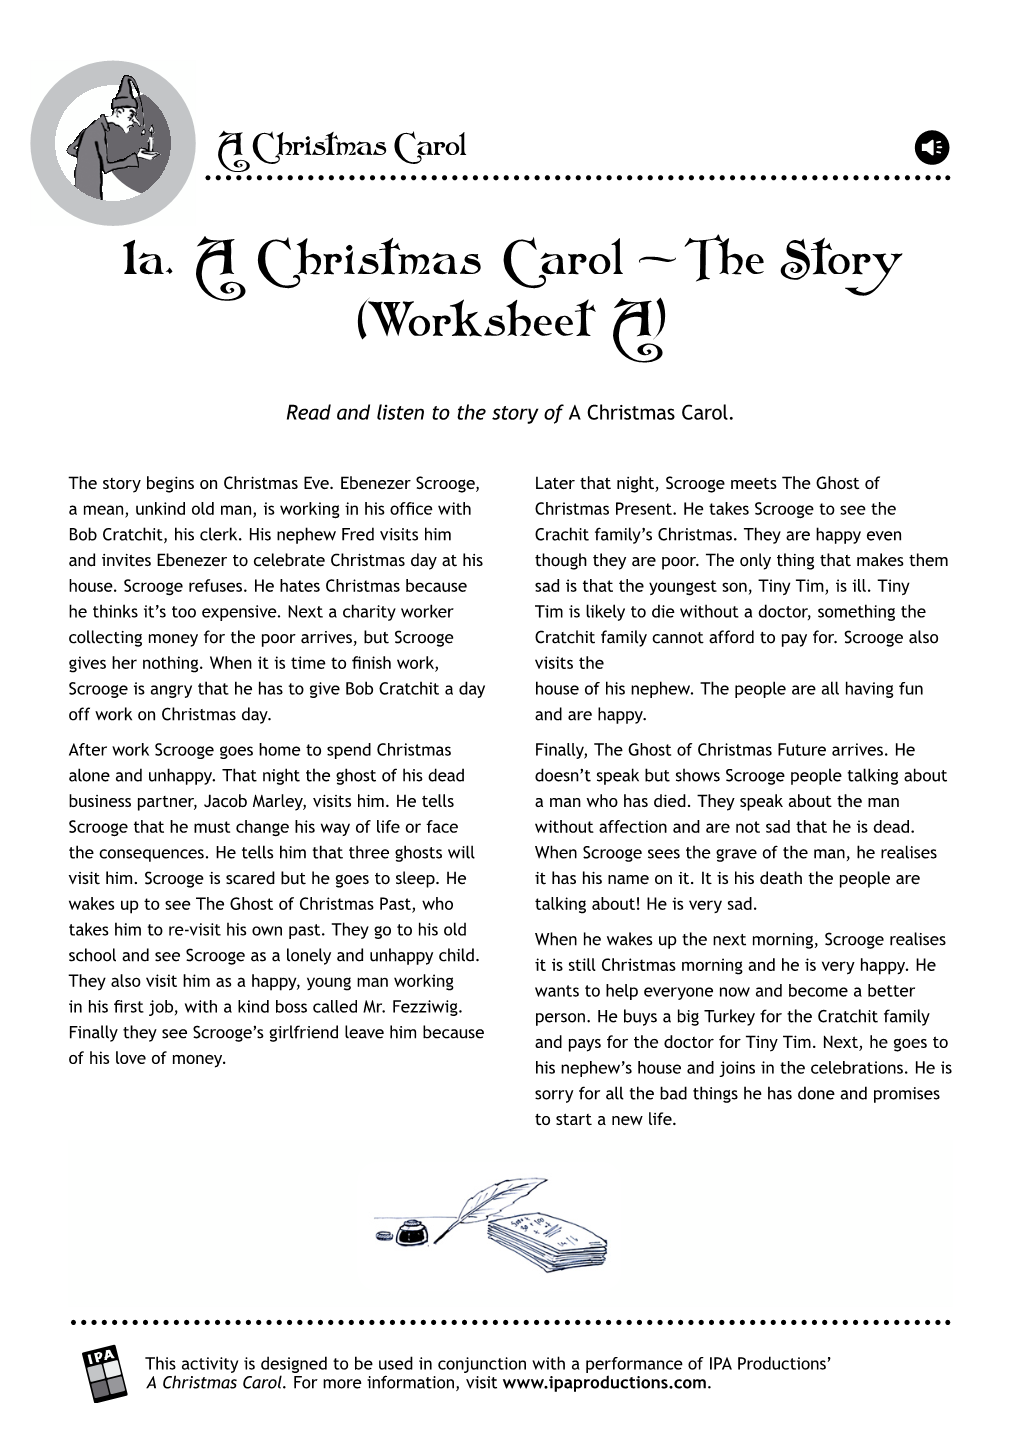 1A. a Christmas Carol - the Story (Worksheet A)